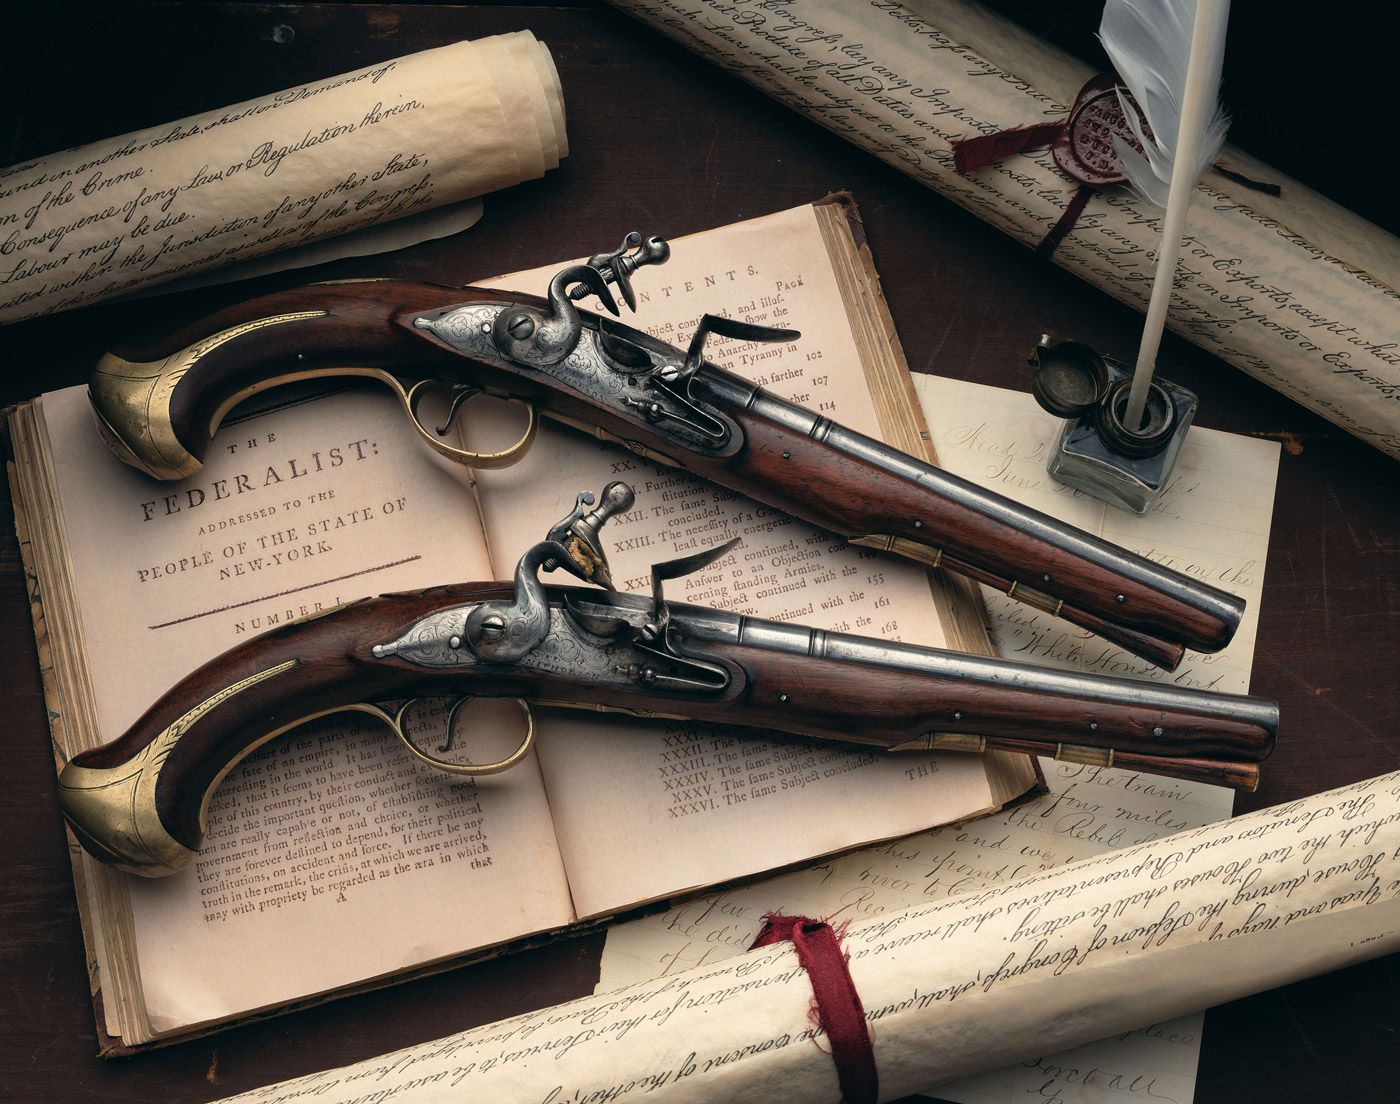 [Press Release] Alexander Hamilton Pistols to Auction